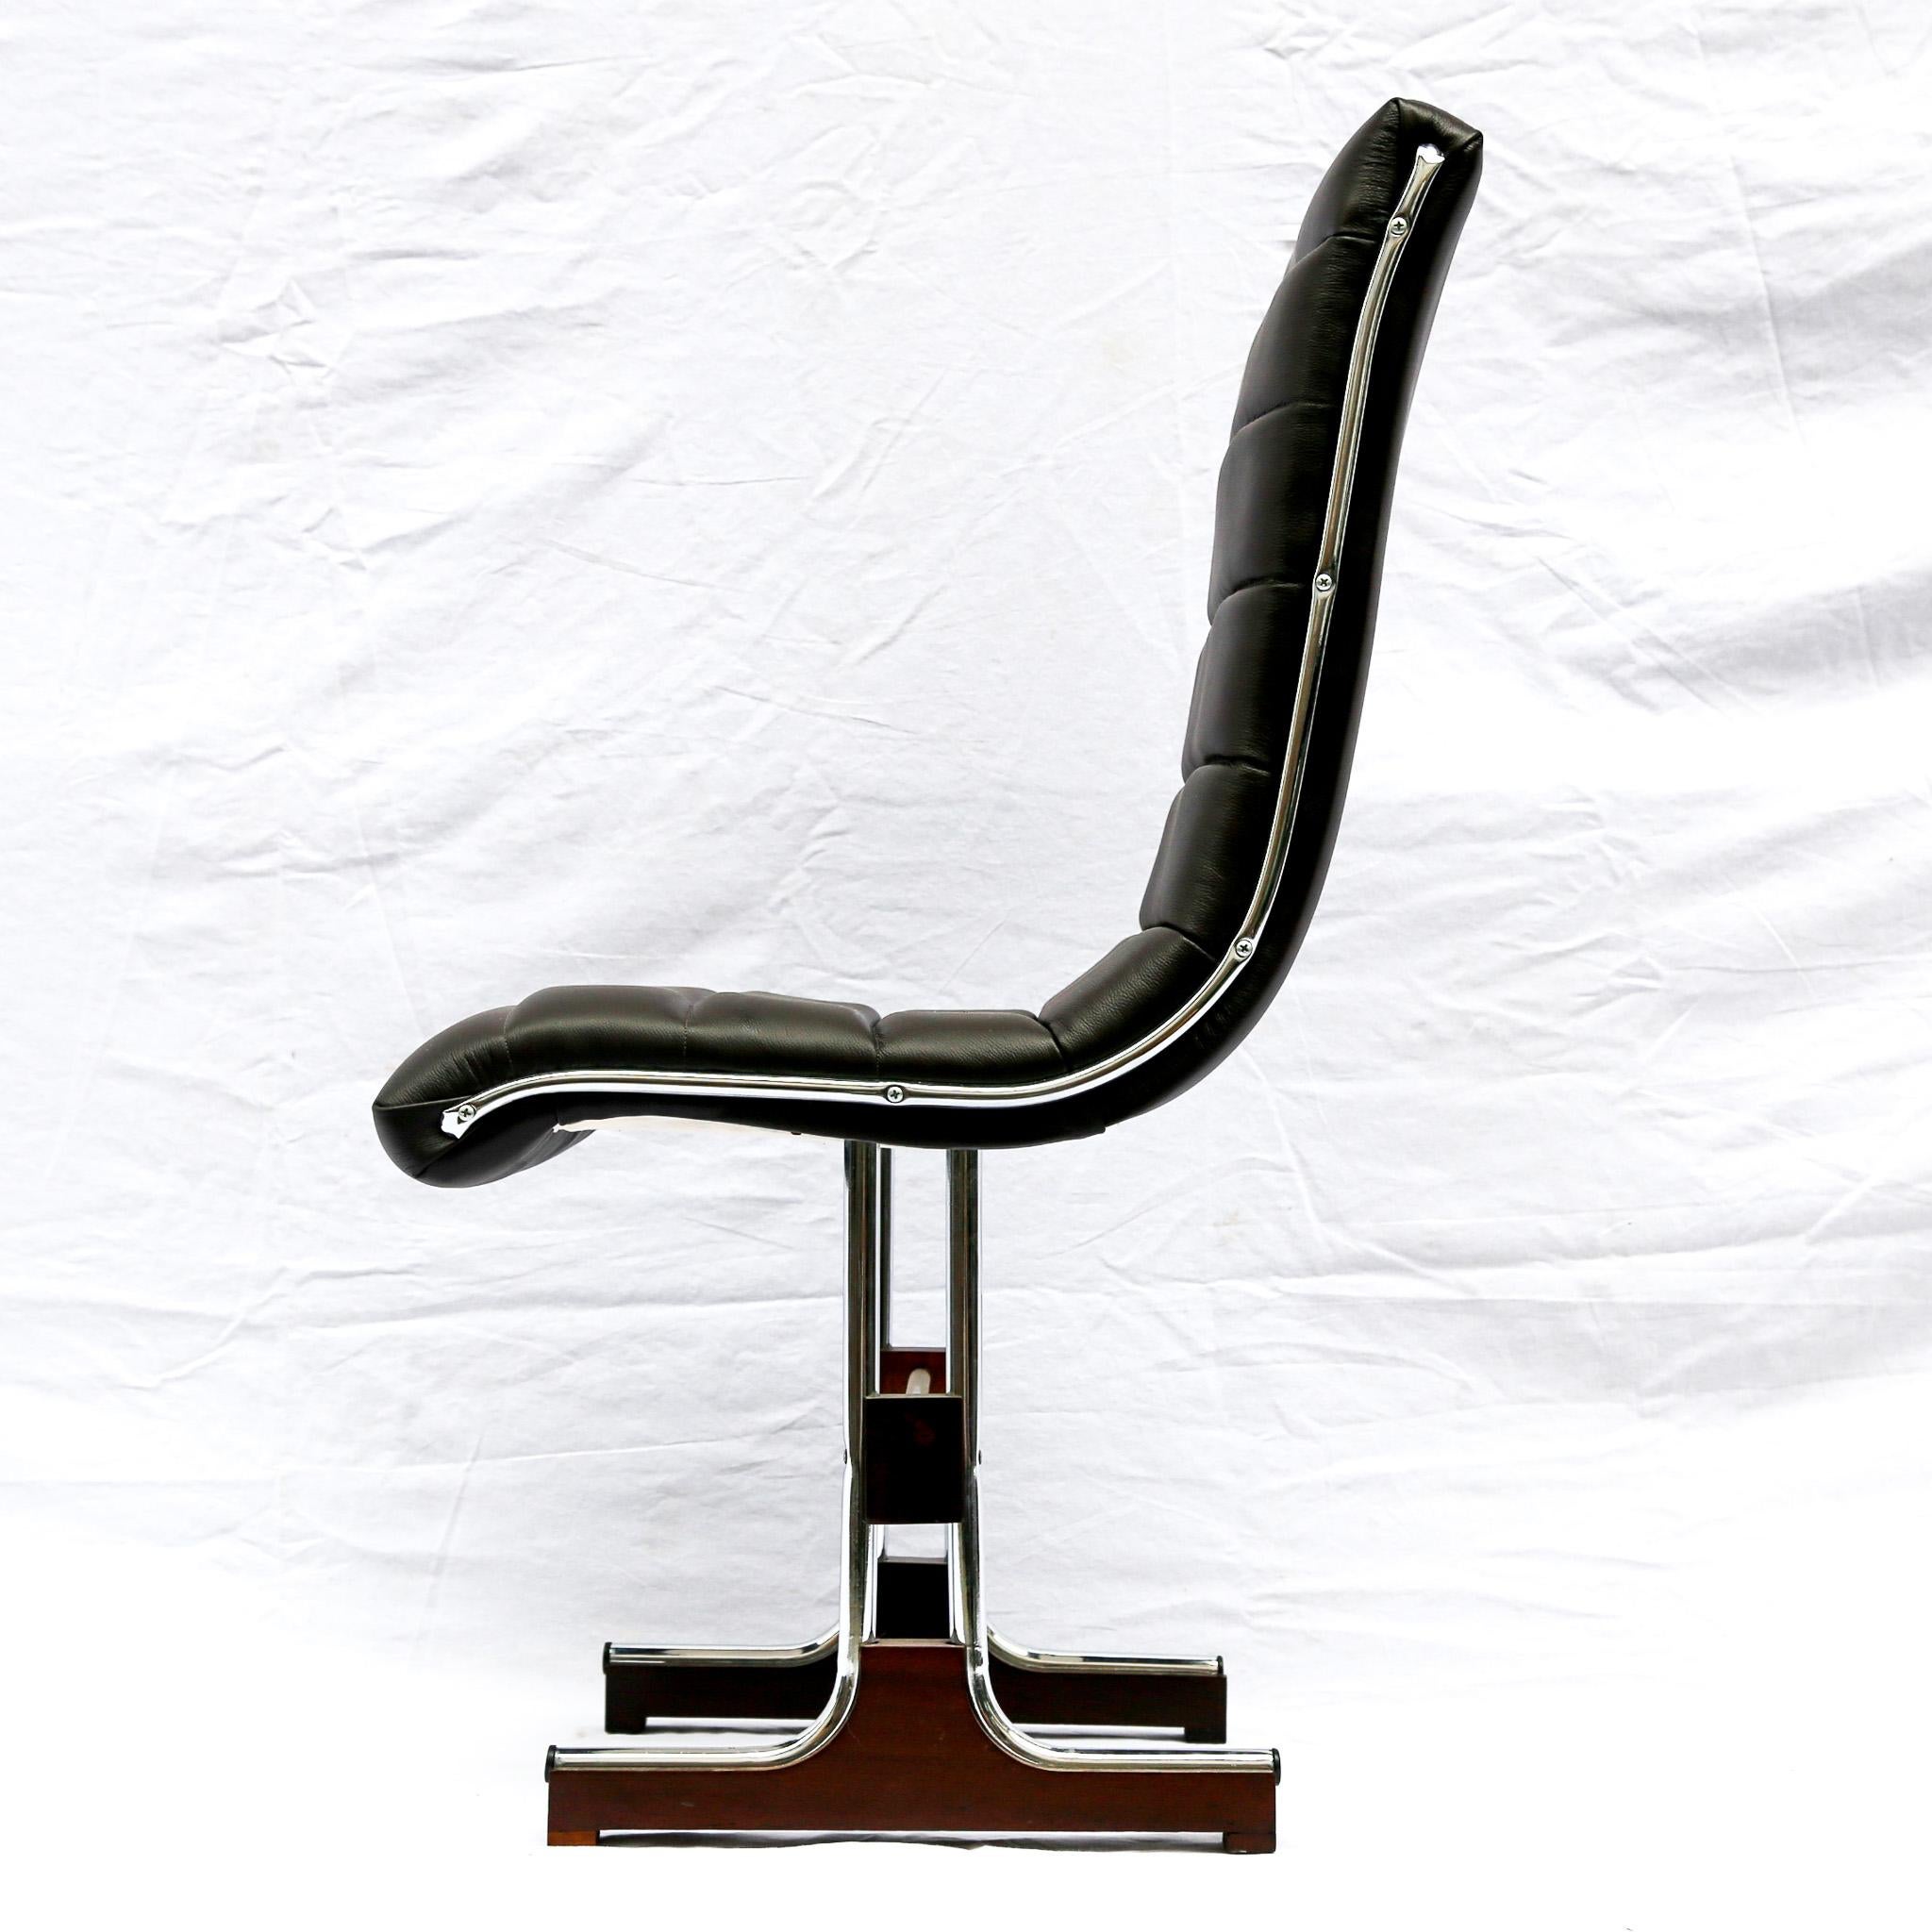 Woodwork Brazilian Modern Chair Set in Leather, Chrome and Hardwood, by Braszenski, 1970s For Sale